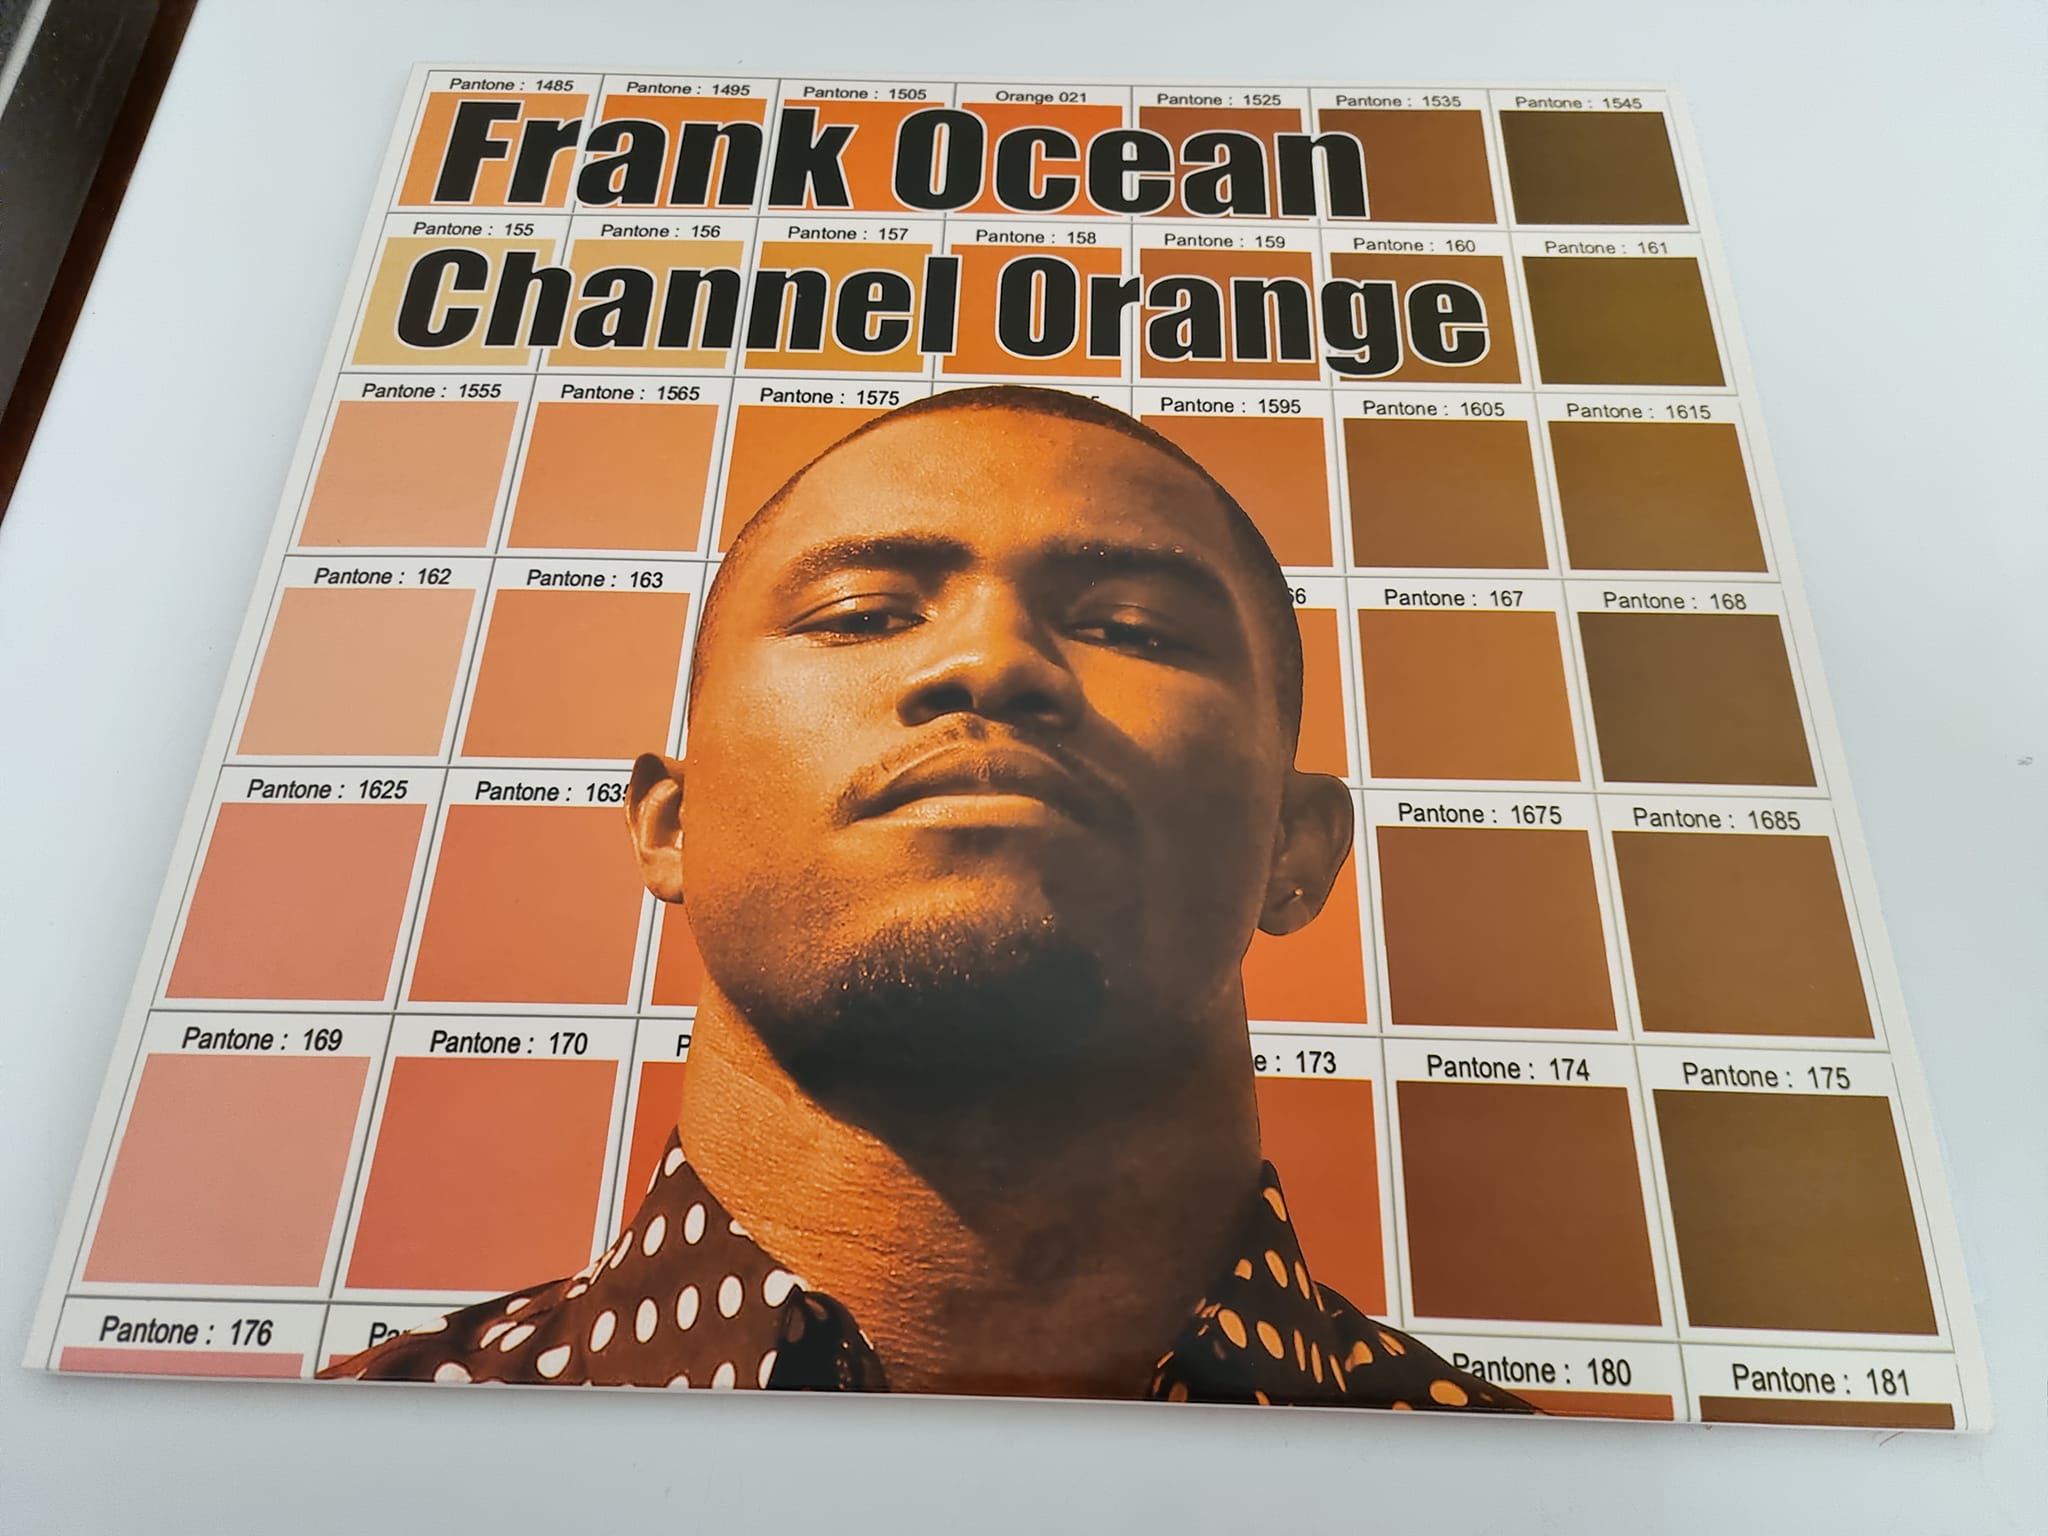 Frank Ocean Says Channel Orange Vinyl Coming “ASAP”